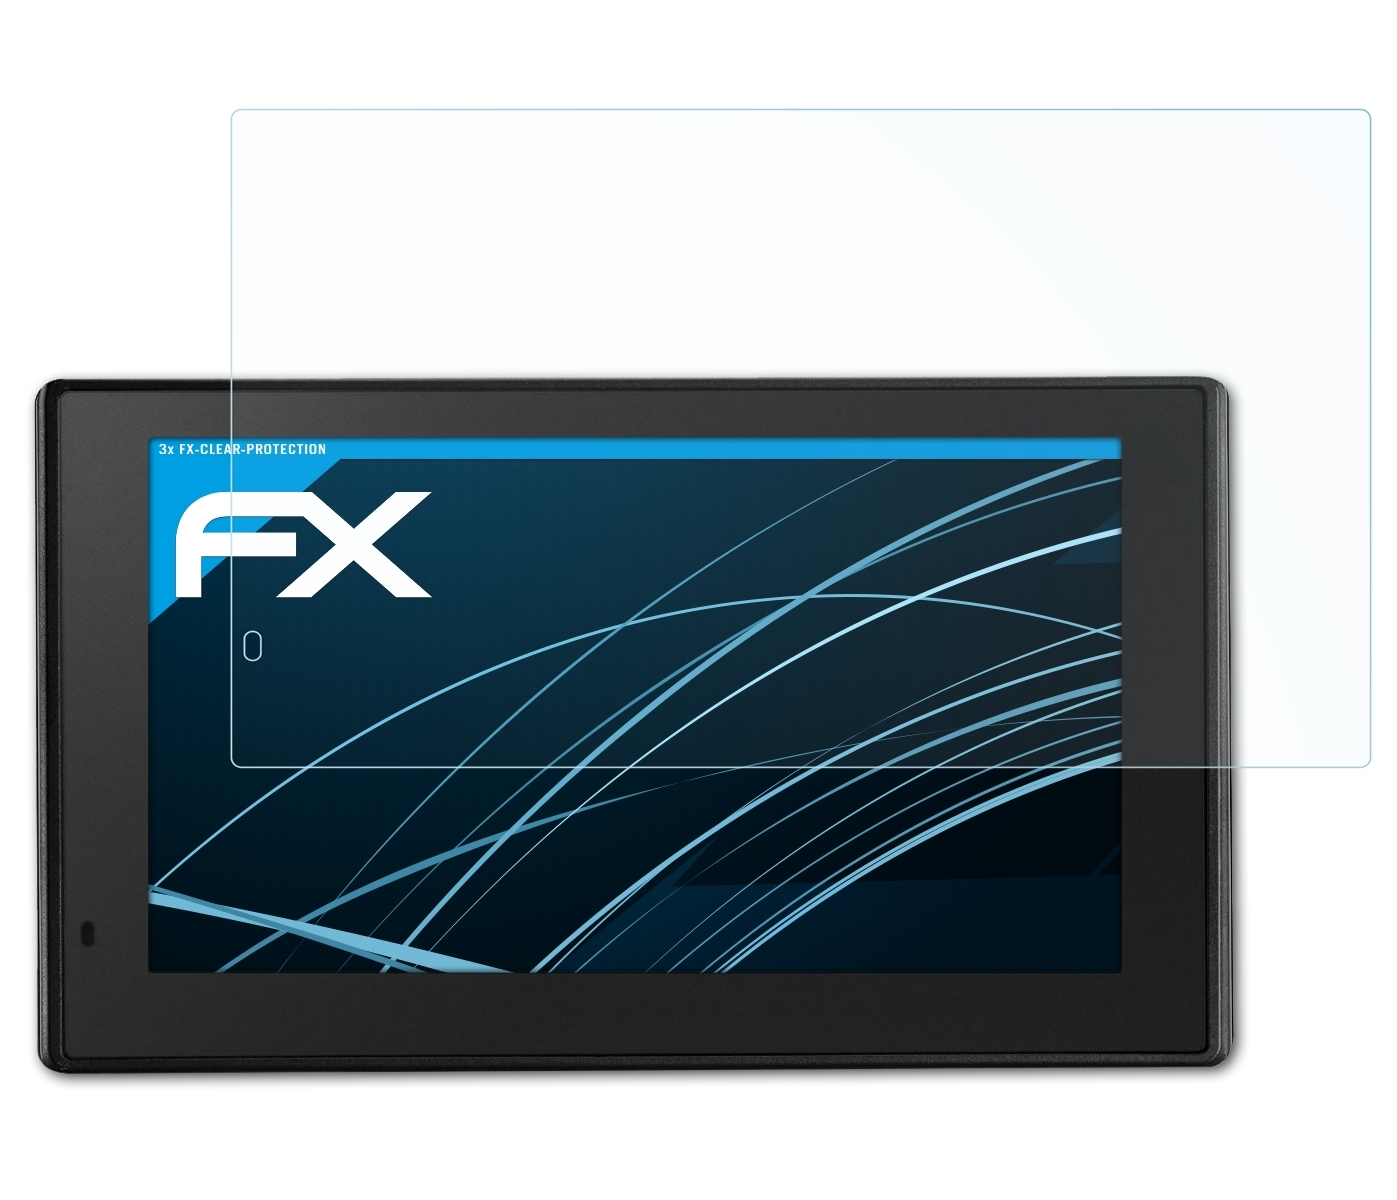 50LMT-D) Displayschutz(für ATFOLIX Garmin FX-Clear DriveSmart 3x